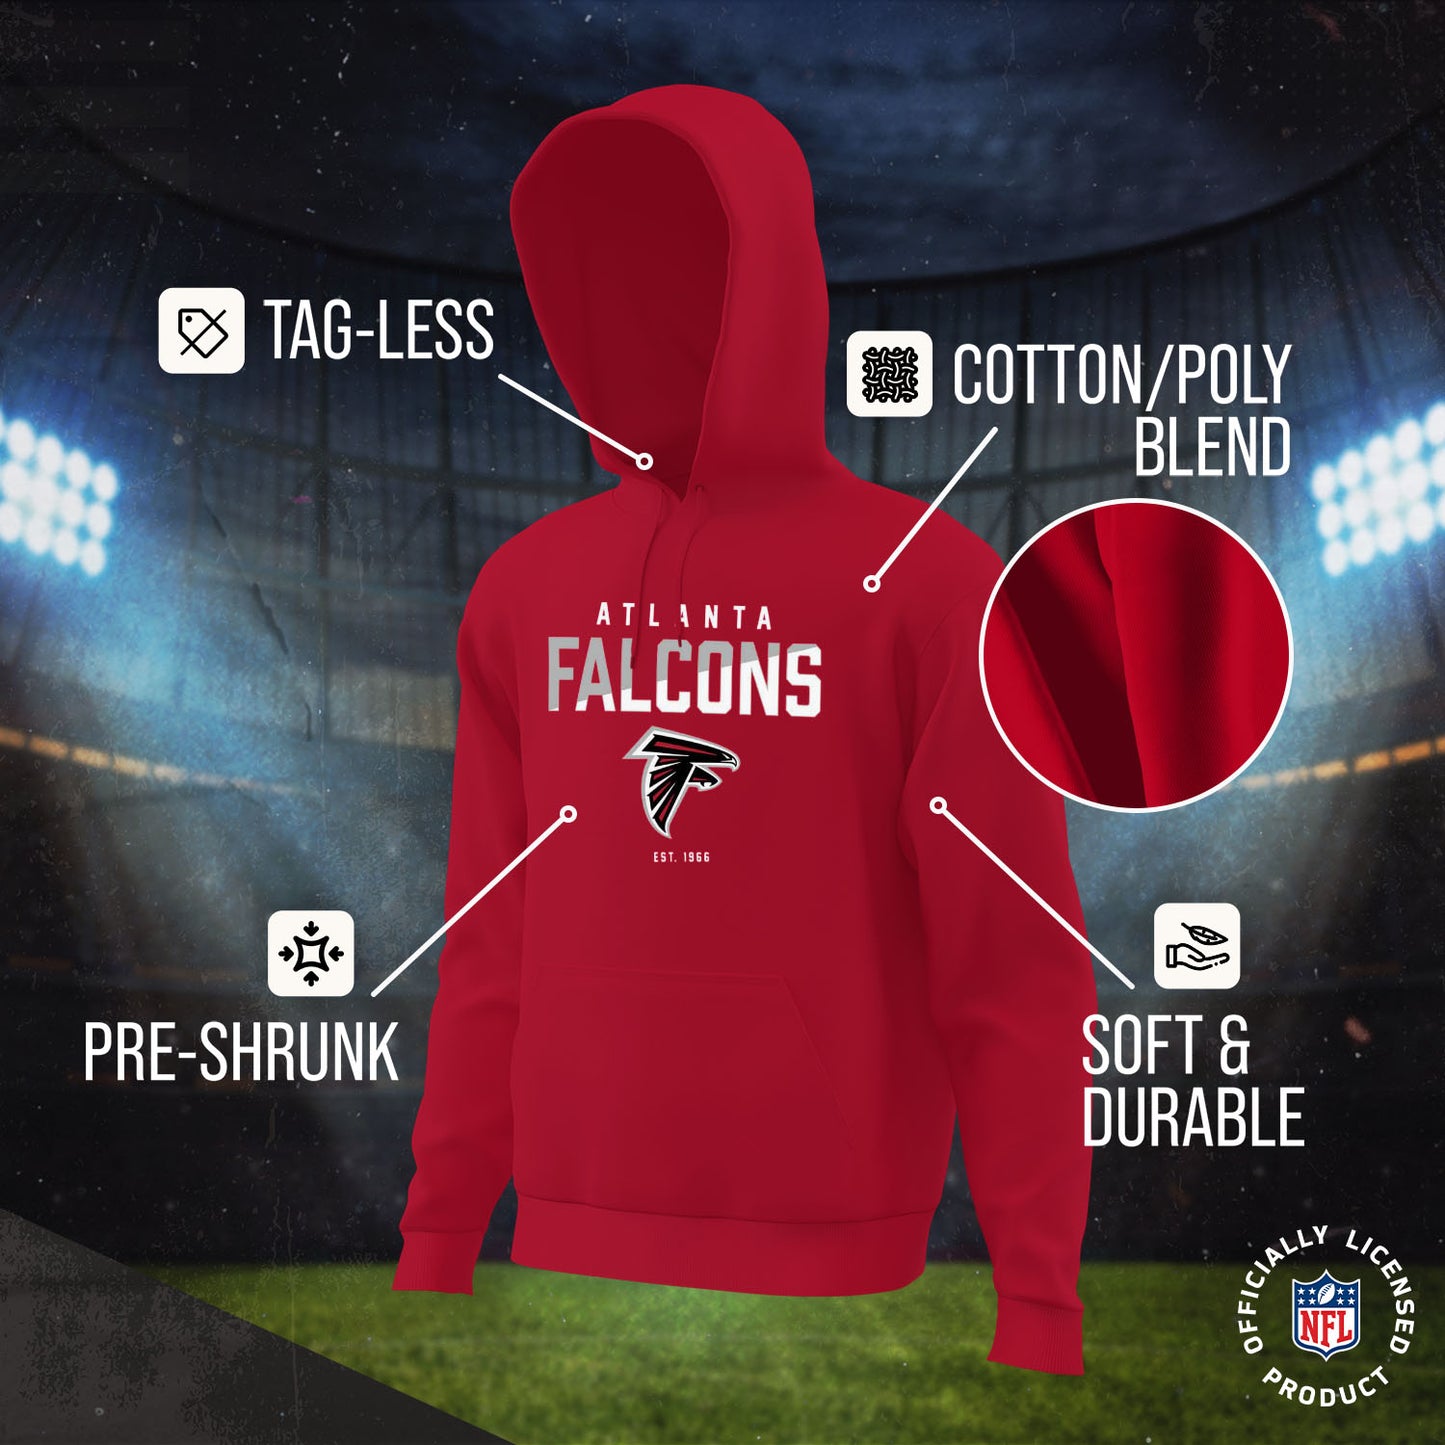 Atlanta Falcons Adult NFL Diagonal Fade Fleece Hooded Sweatshirt - Red